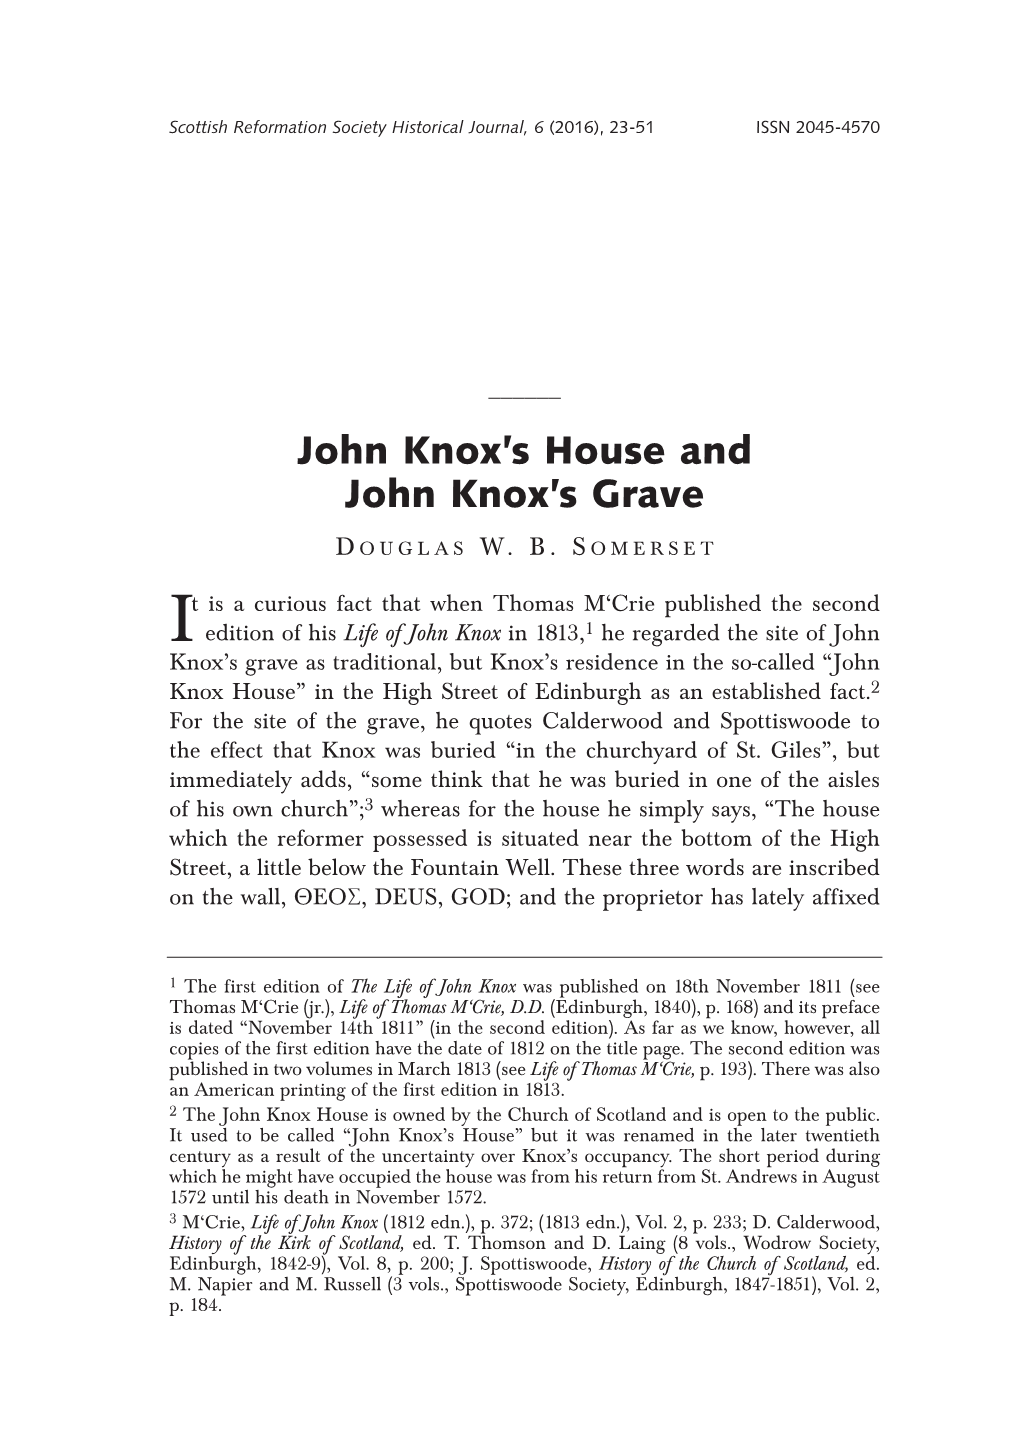 John Knox's House and John Knox's Grave